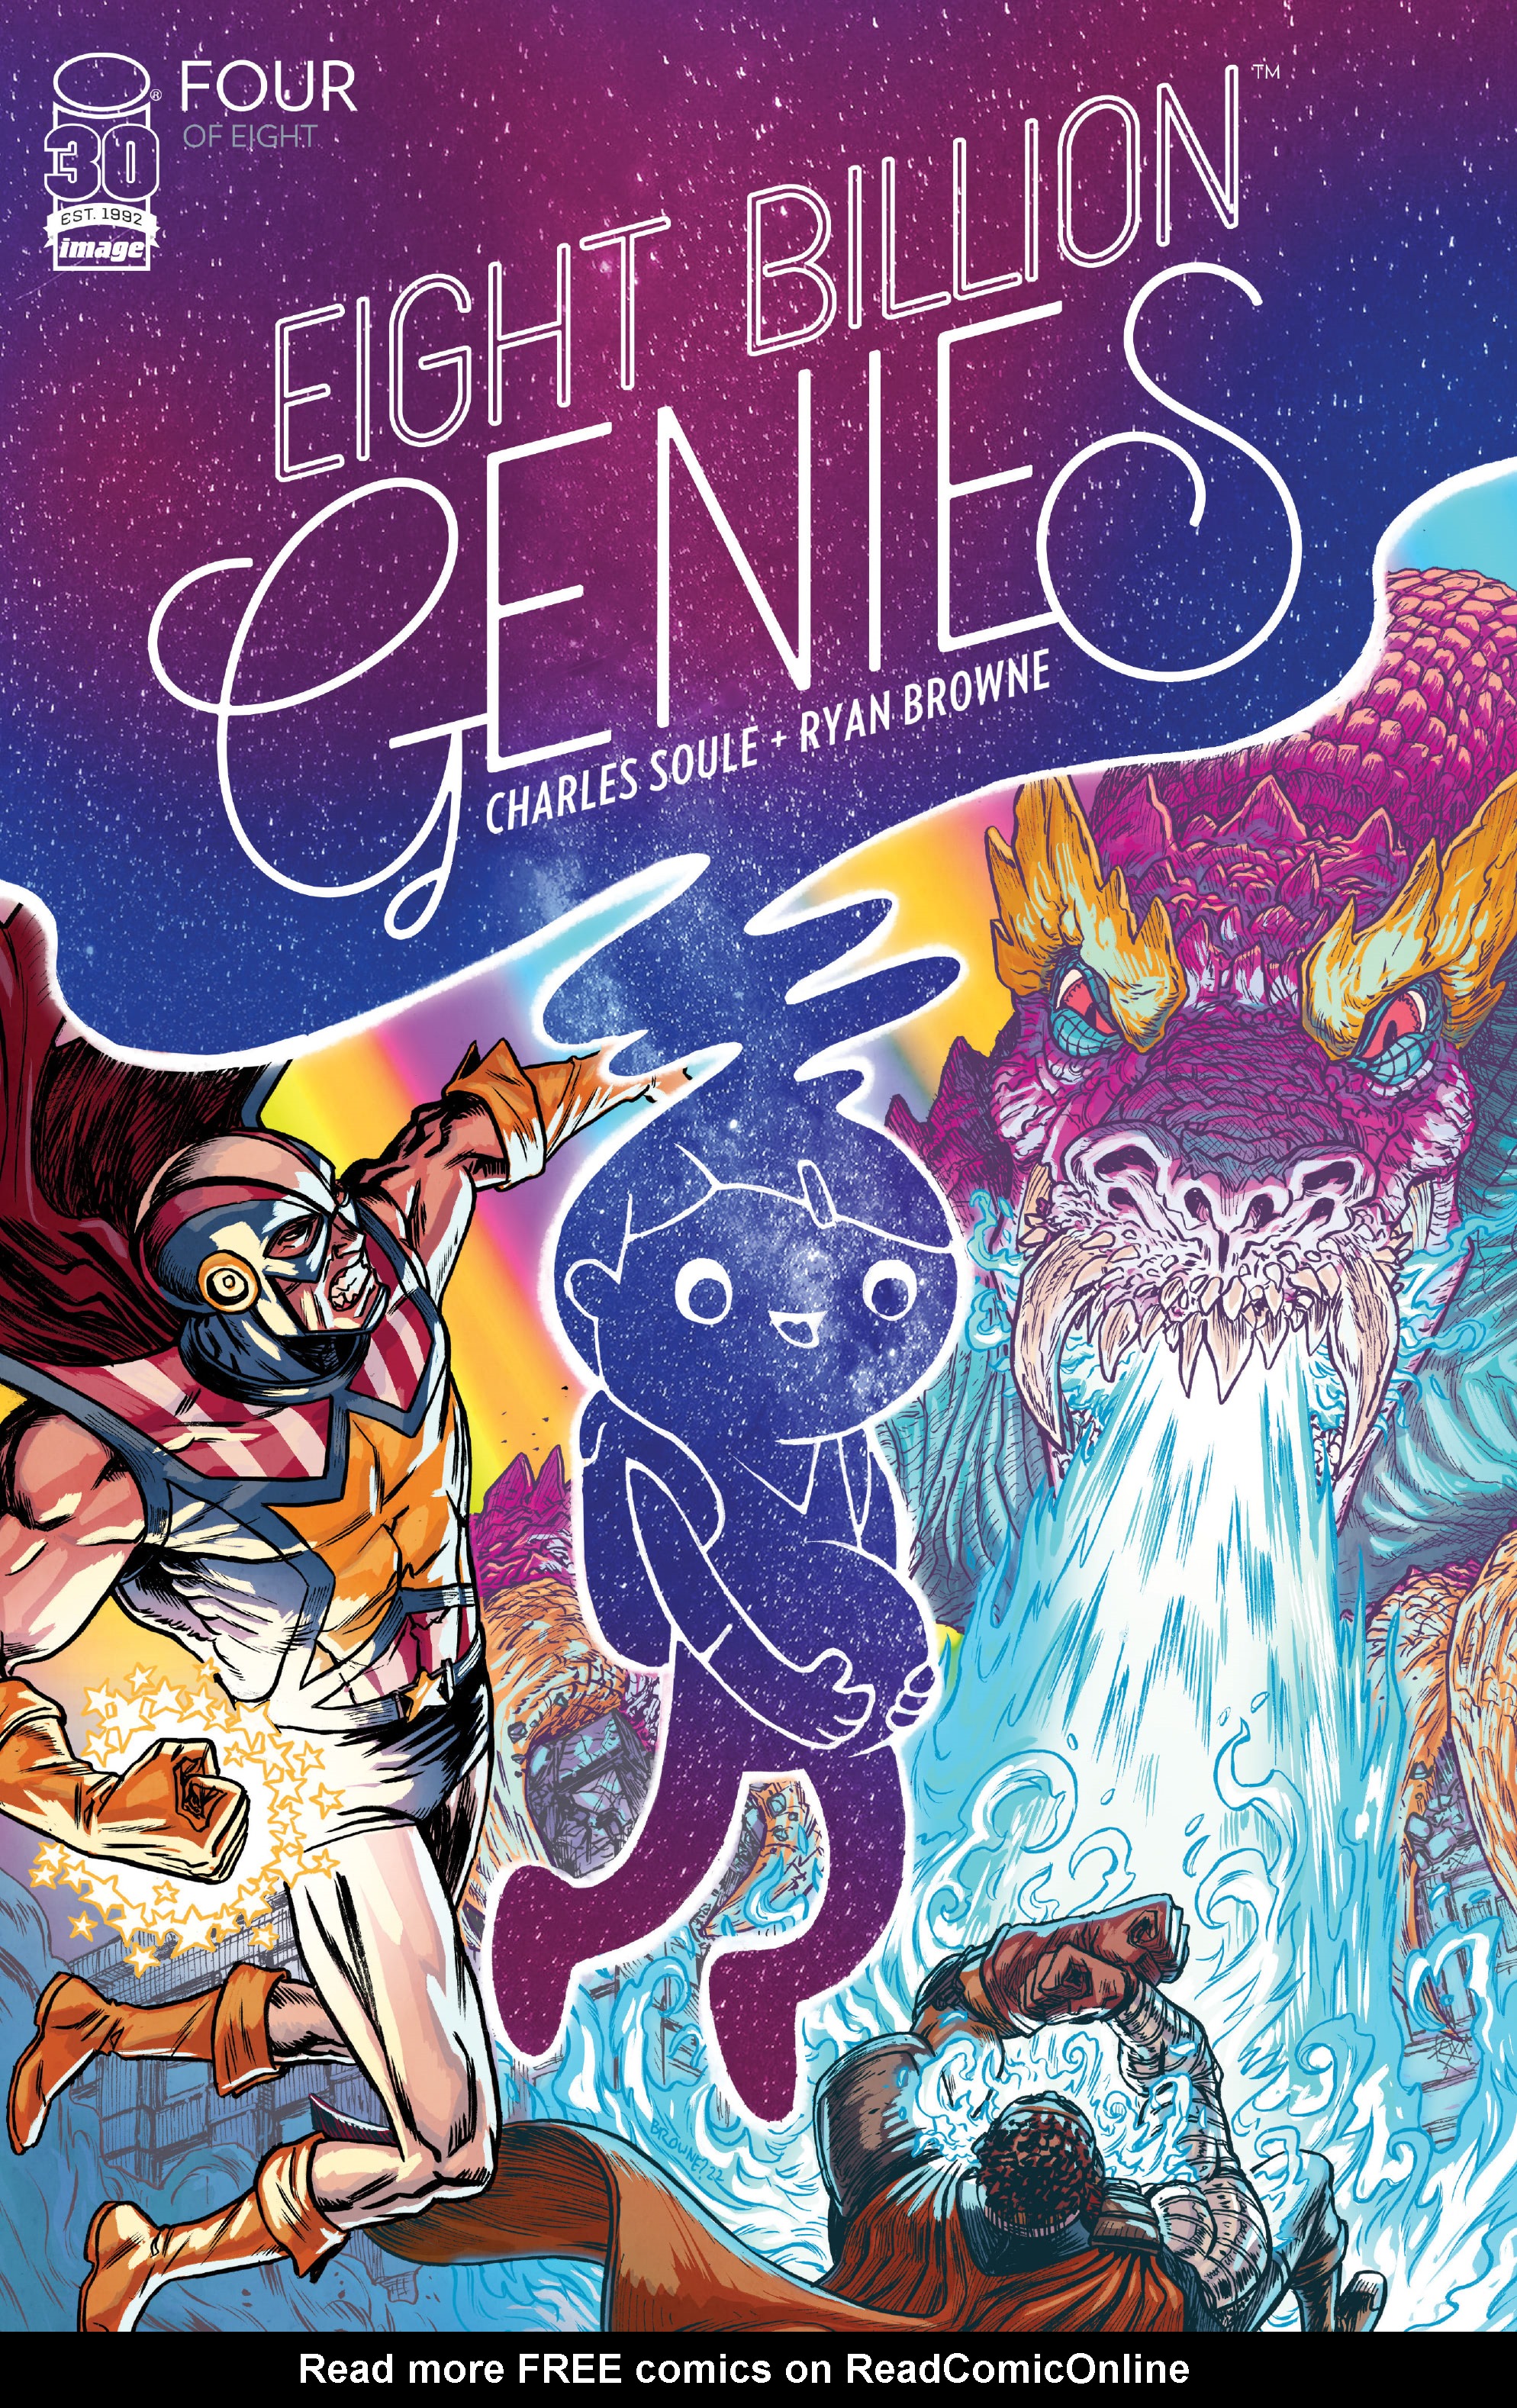 Read online Eight Billion Genies comic -  Issue #4 - 1